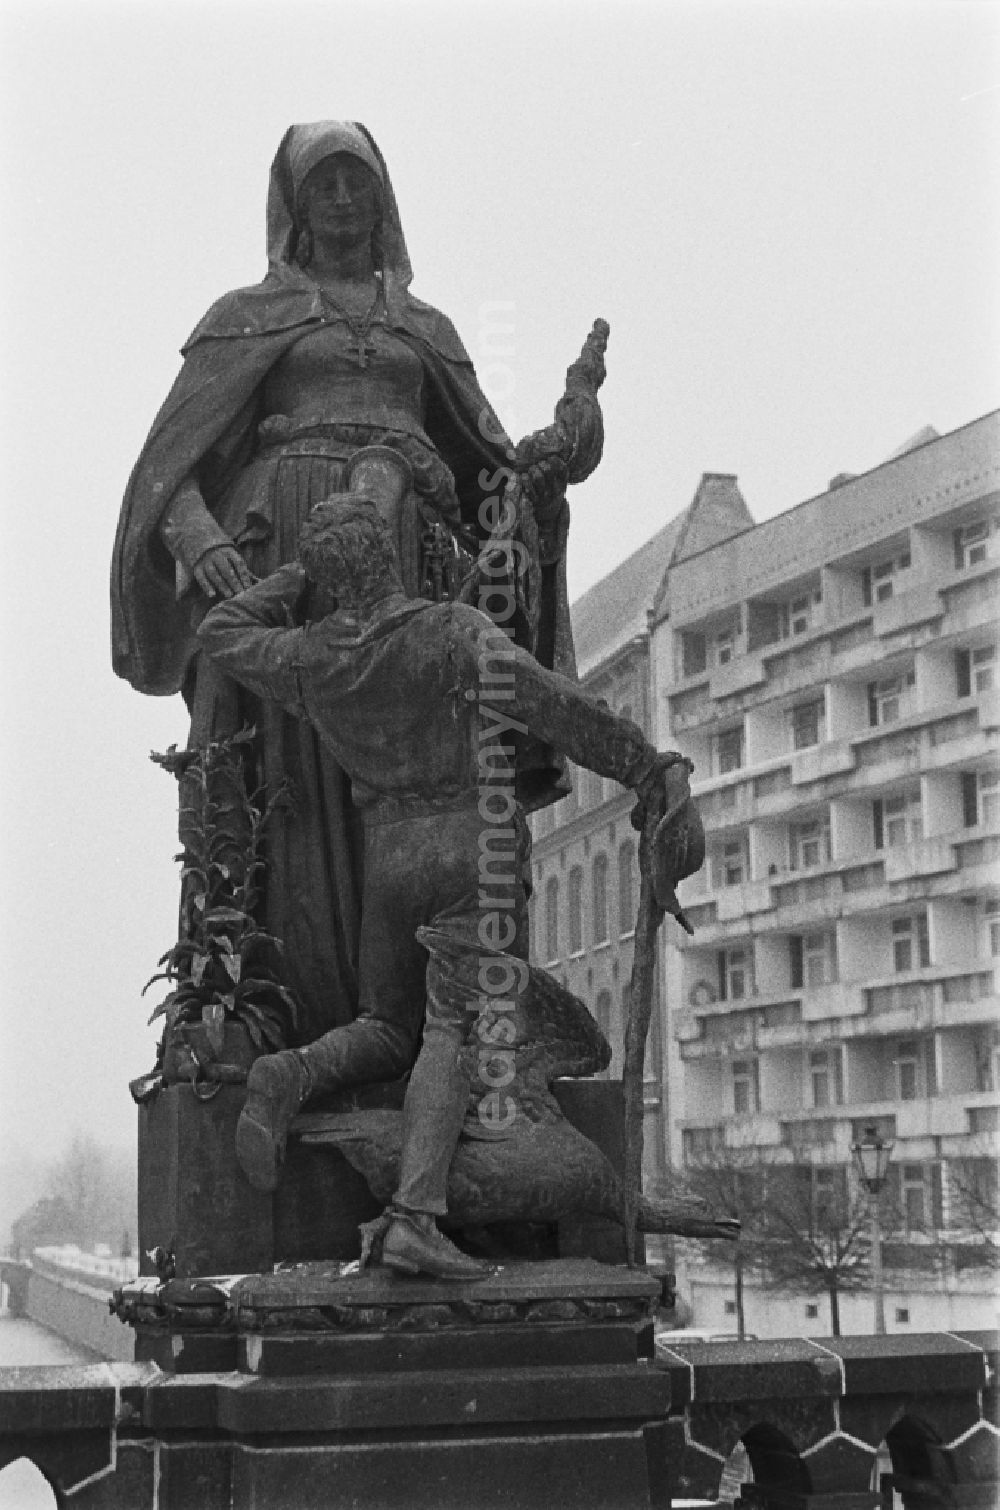 GDR photo archive: Berlin - Sculpture Heilige Gertraud auf der Bruestung der Gertraudenbruecke in the district Mitte in Berlin, the former capital of the GDR, German Democratic Republic